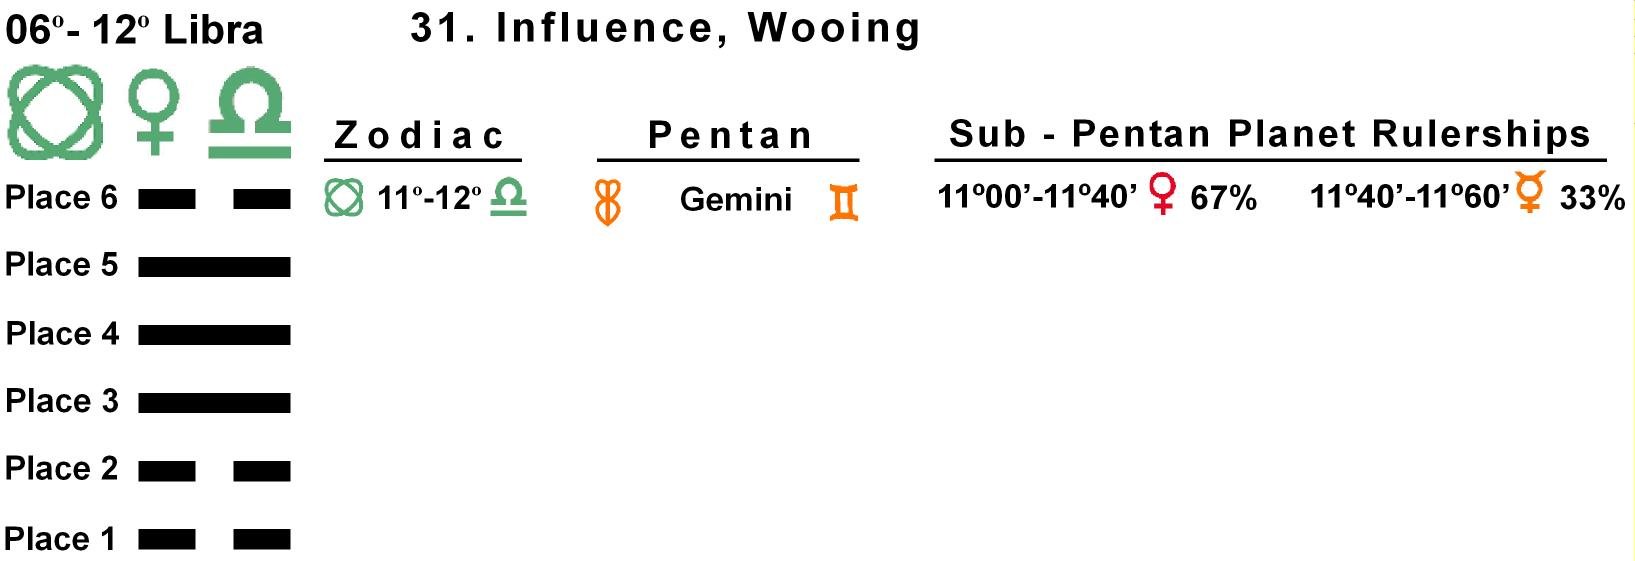 Pent-lines-07LI 11-12 Hx-31 Influence Wooing